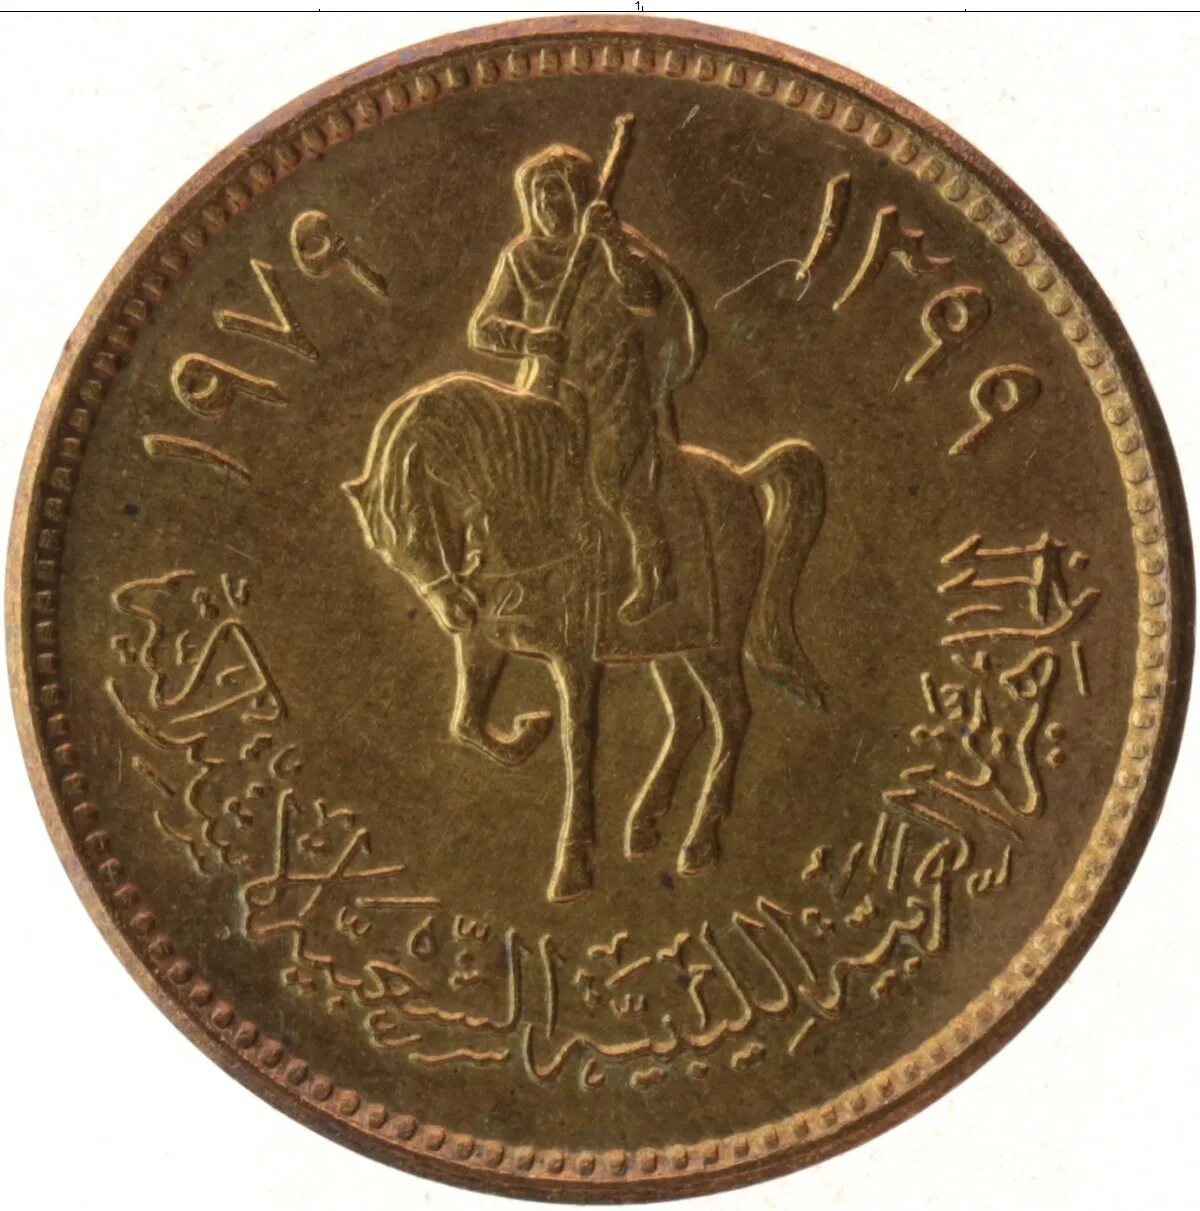 140 дирхам. Монета 20 дирхам 1979 Ливия. Монеты Ливия. Libya монеты. 50 Дирхам монета.